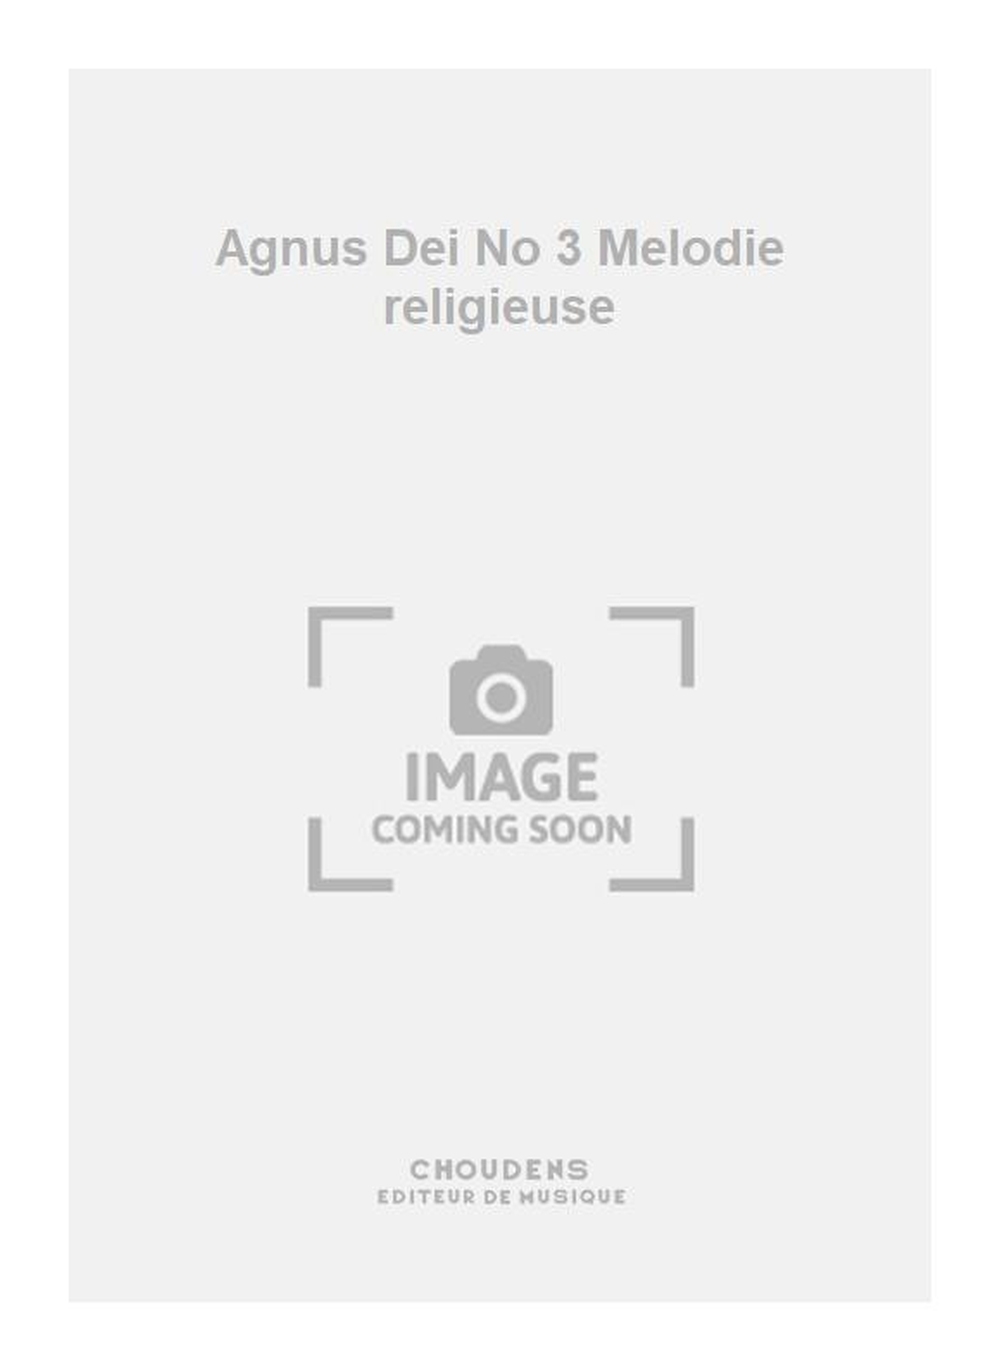 Georges Bizet: Agnus Dei No 3 Melodie religieuse